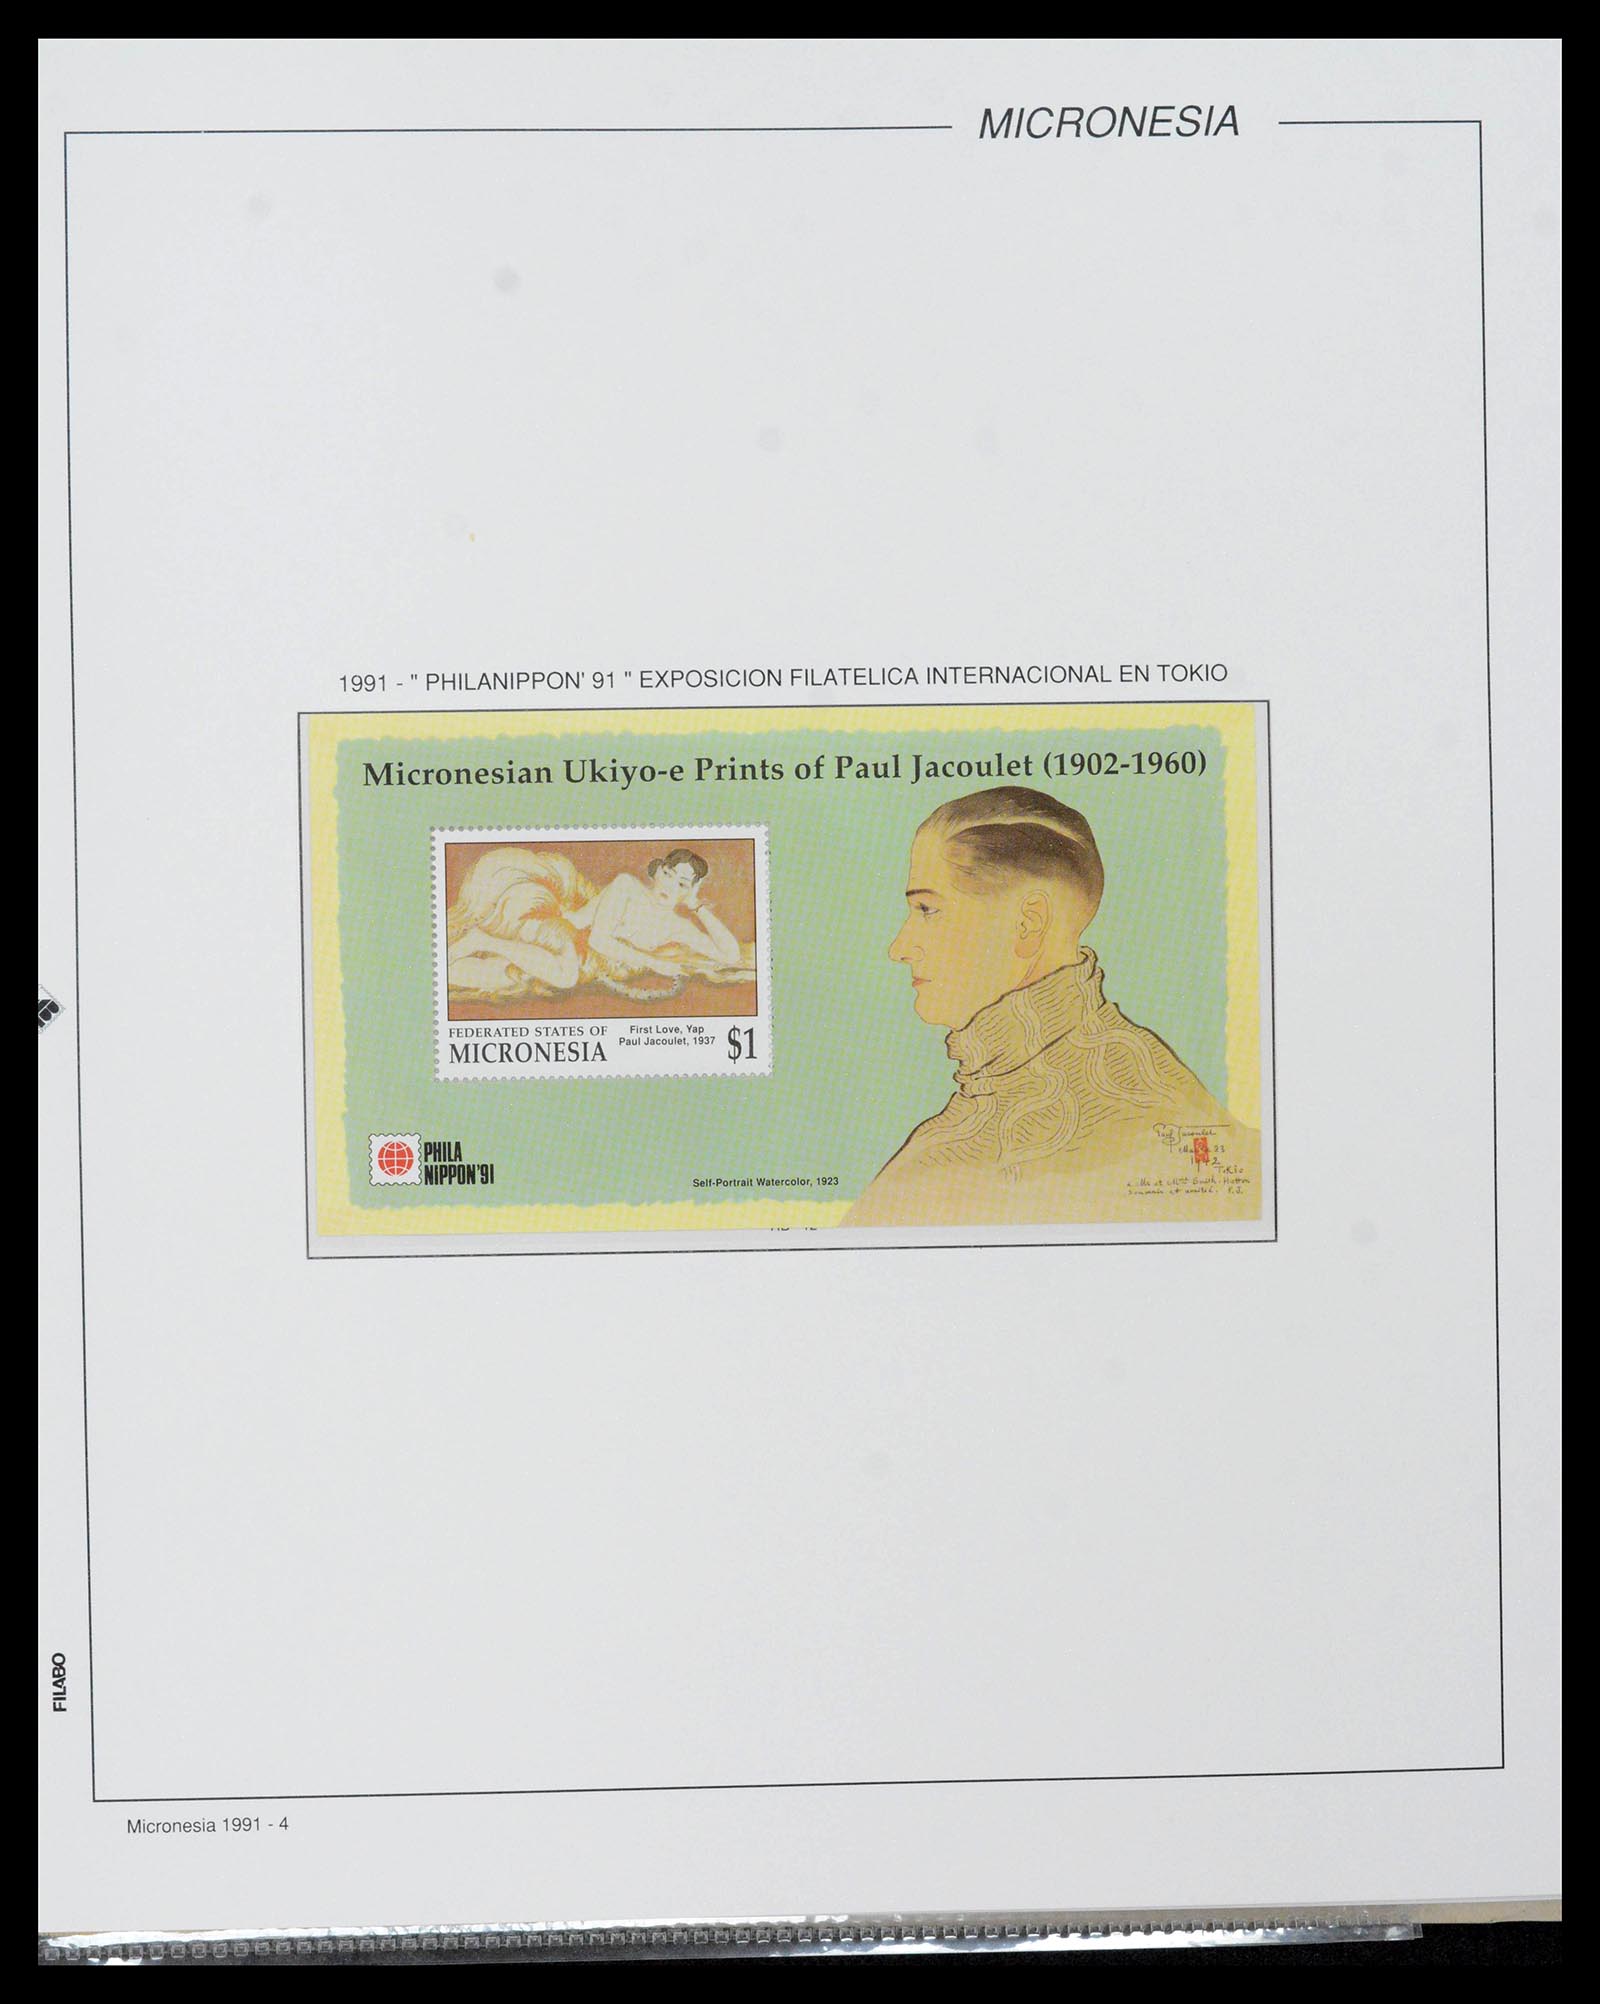 39222 0094 - Stamp collection 39222 Palau, Micronesia and Marshall islands 1980-1995.